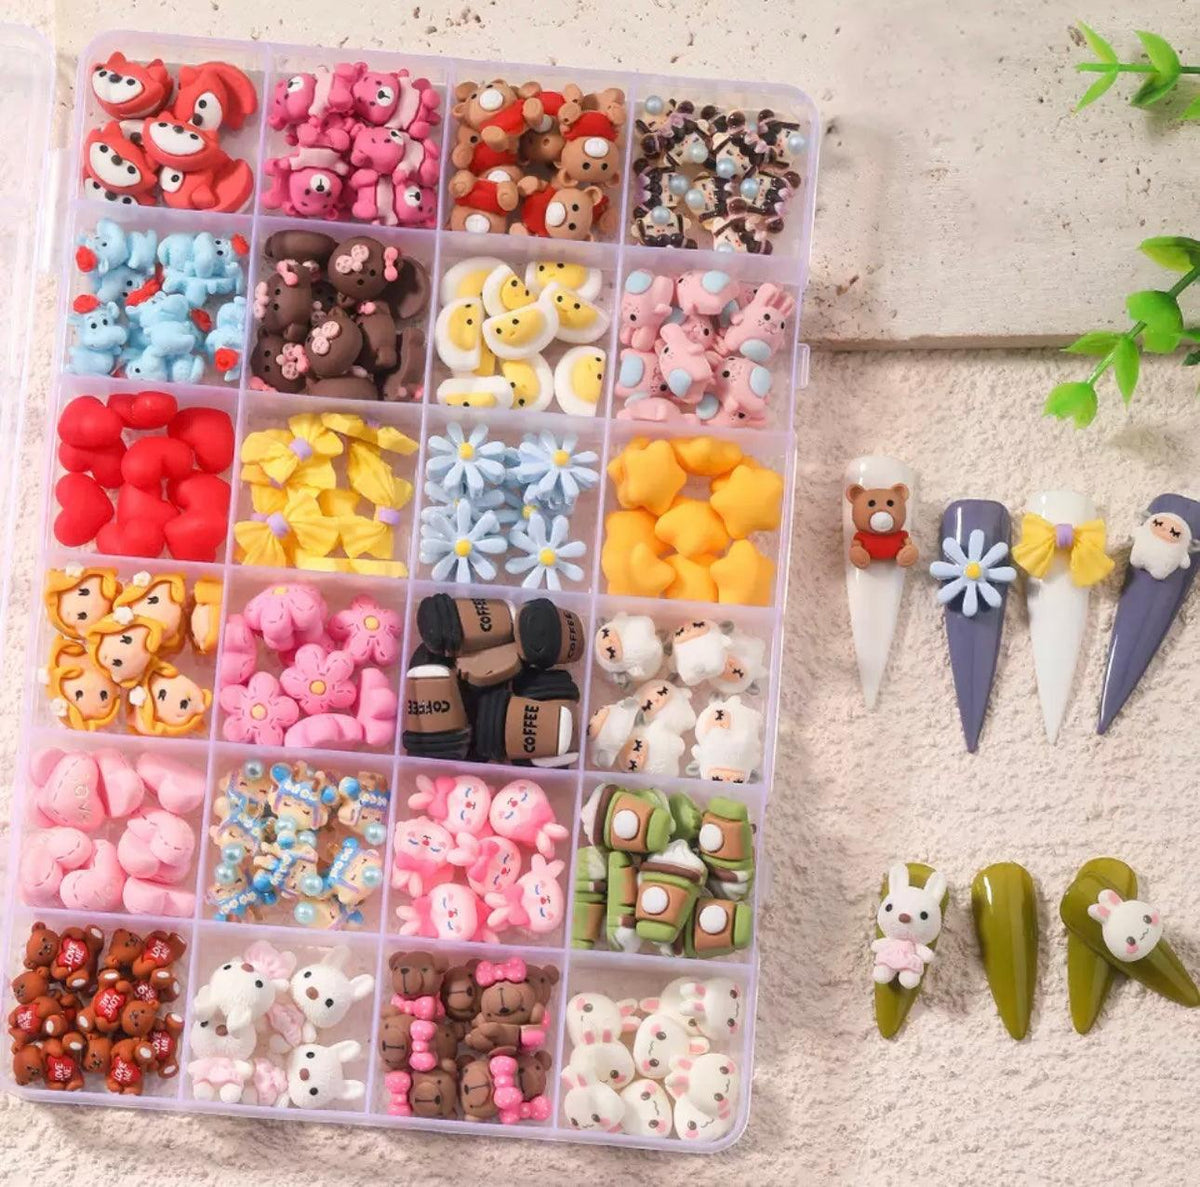 yolai 50pcs 3d gummy candy nail charms colorful sugar gummie candy lollipop  cute kawaii 3d nail art charms for nail art designs diy crafting  accessories 